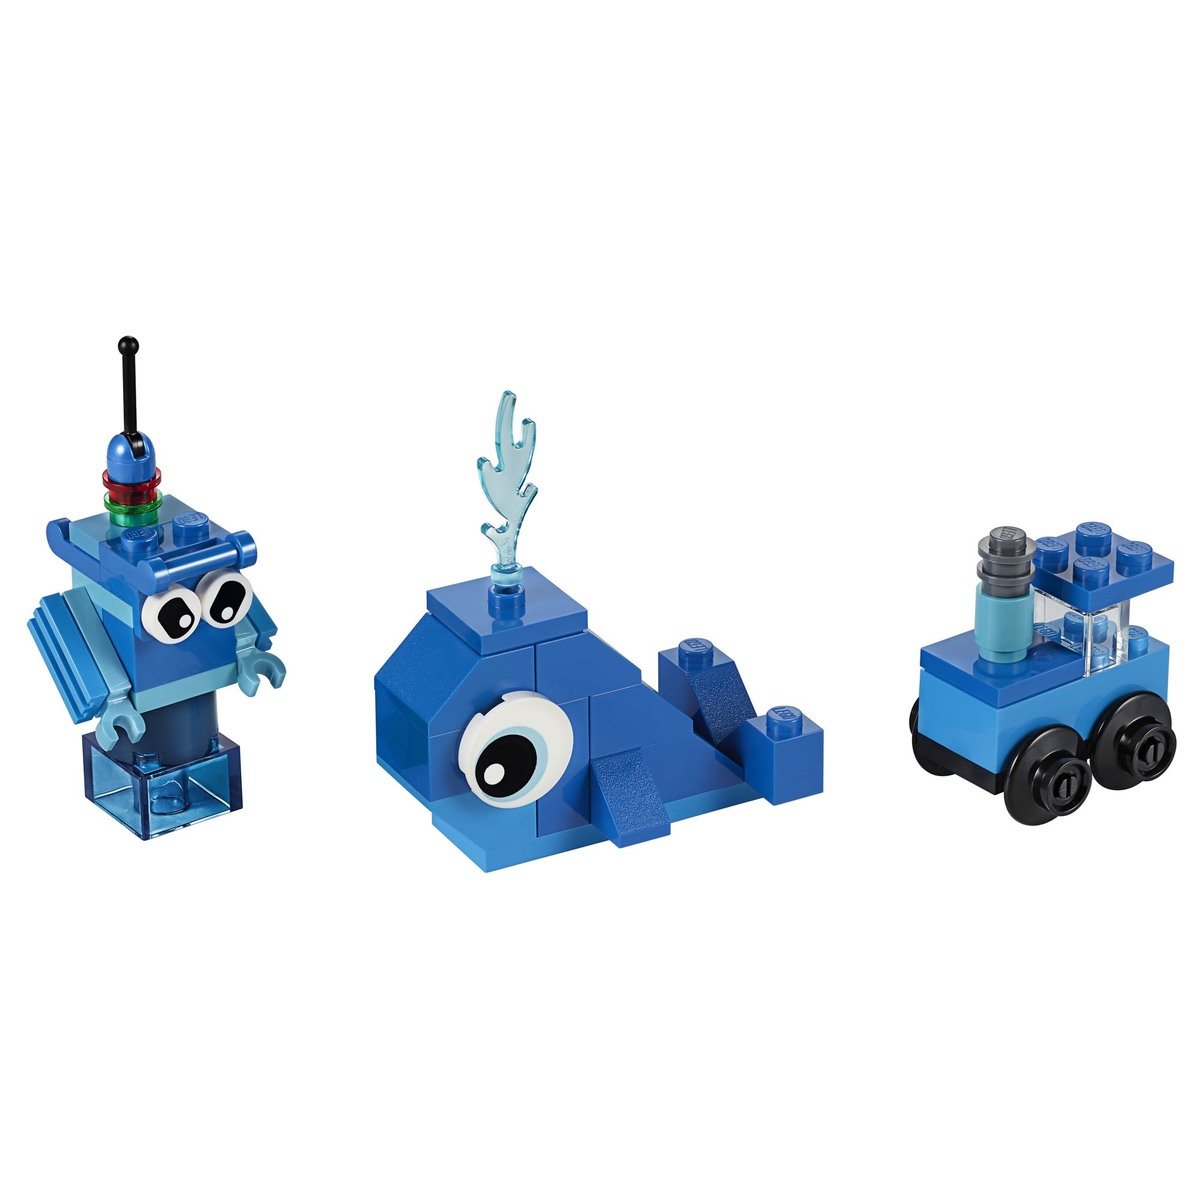 Lego Classic Creative Blue Bricks 11006